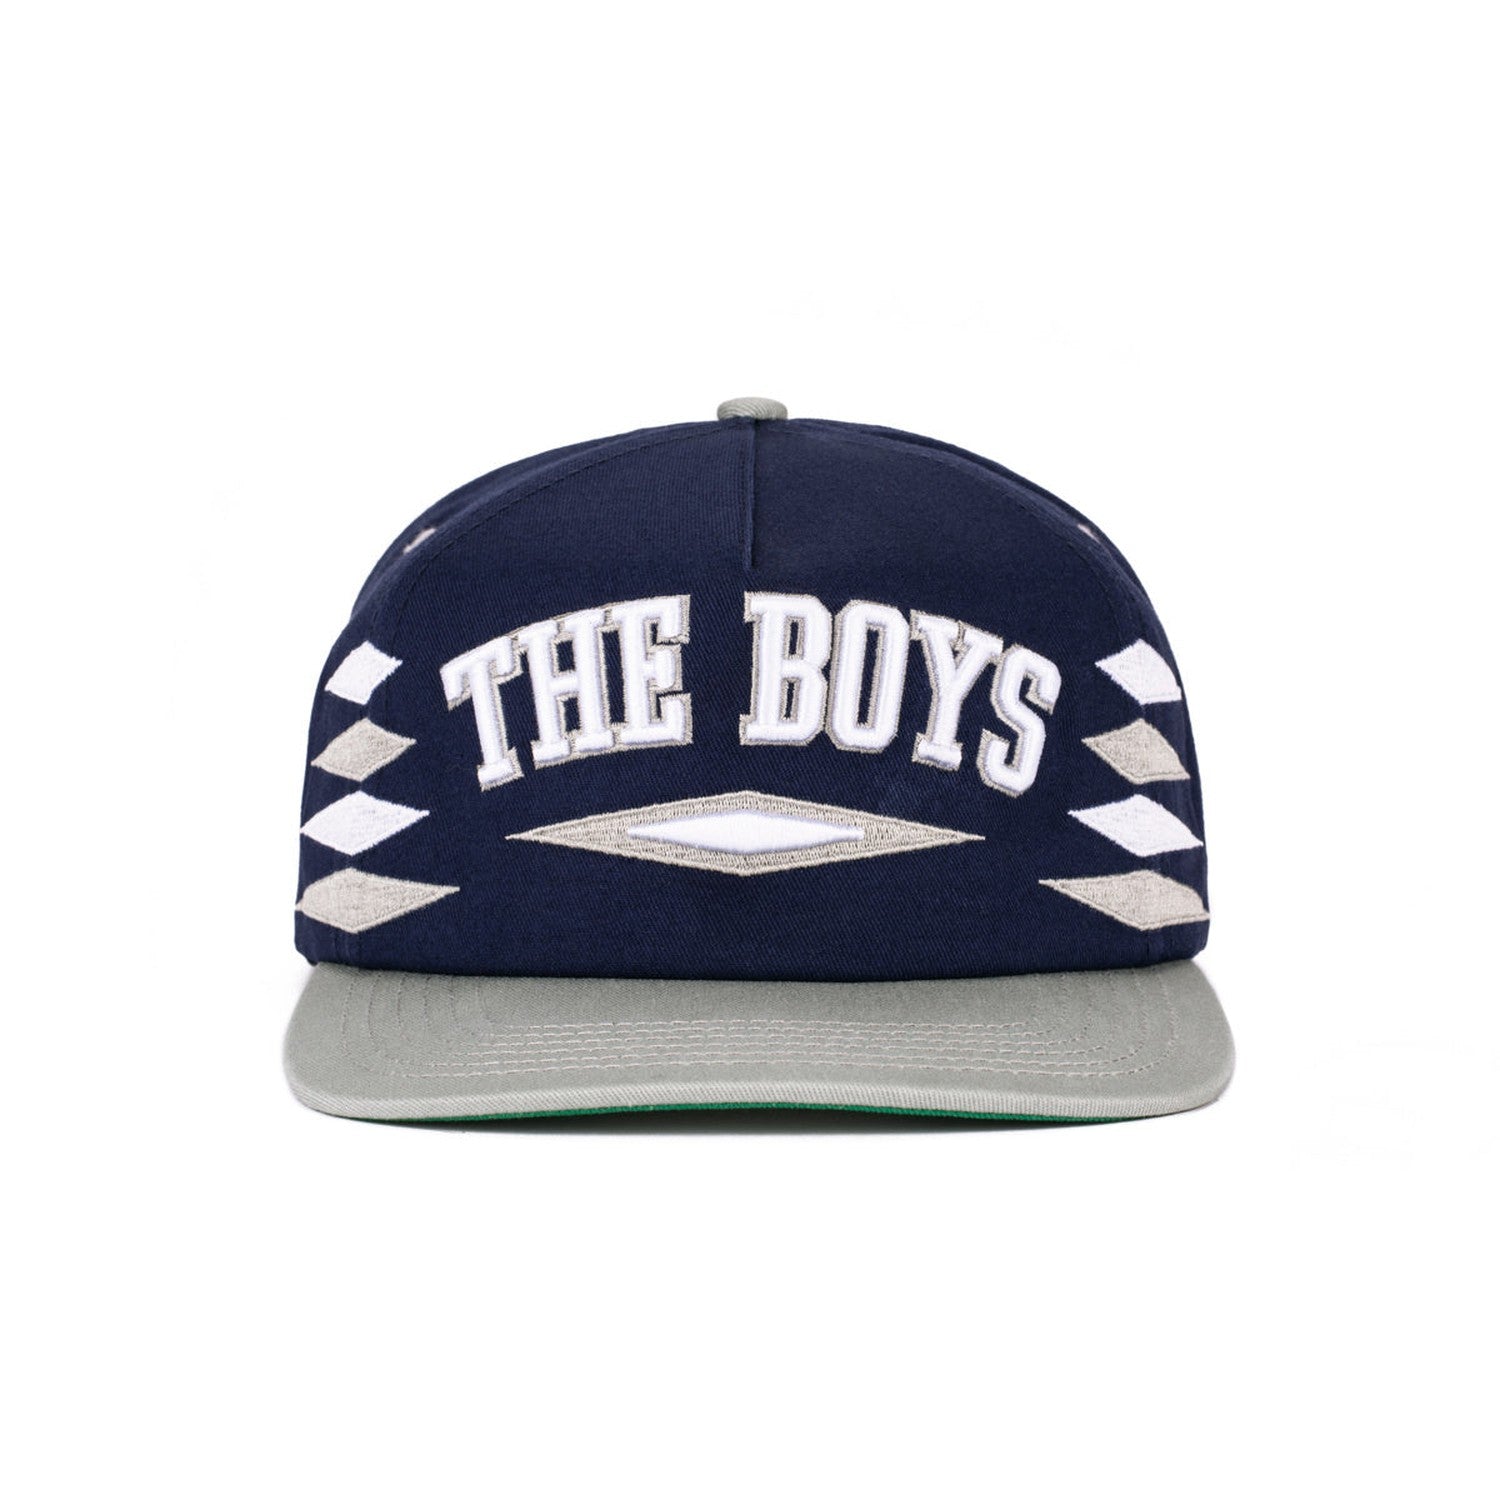 Negro League Stars Fitted Vintage Hat Hat Cap Size 7 5/8